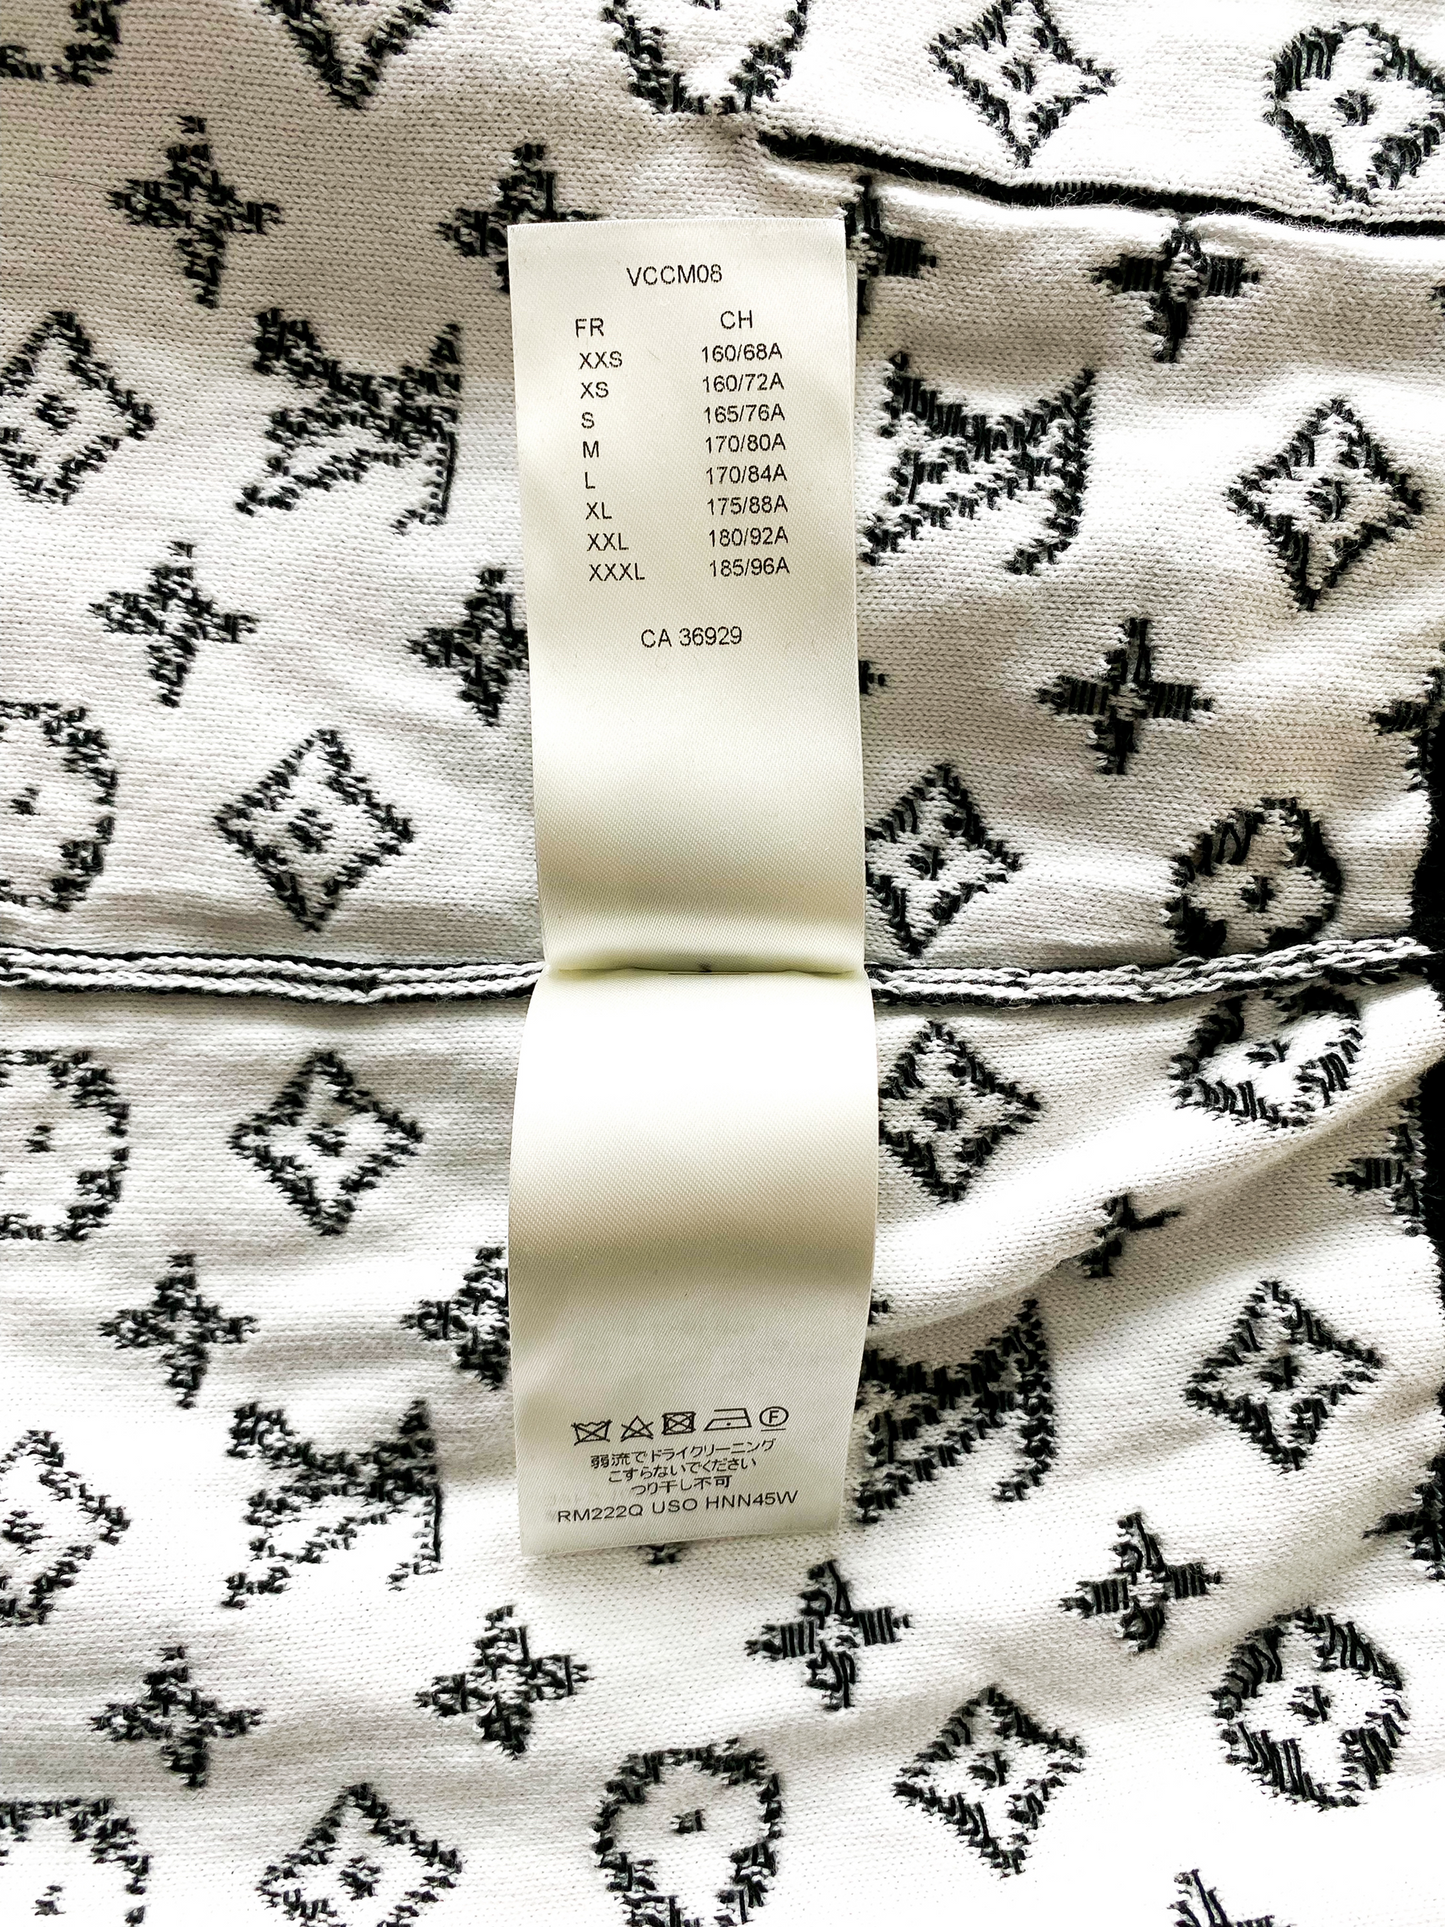 Louis Vuitton® Monogram Gradient Hoodie Black White. Size S0